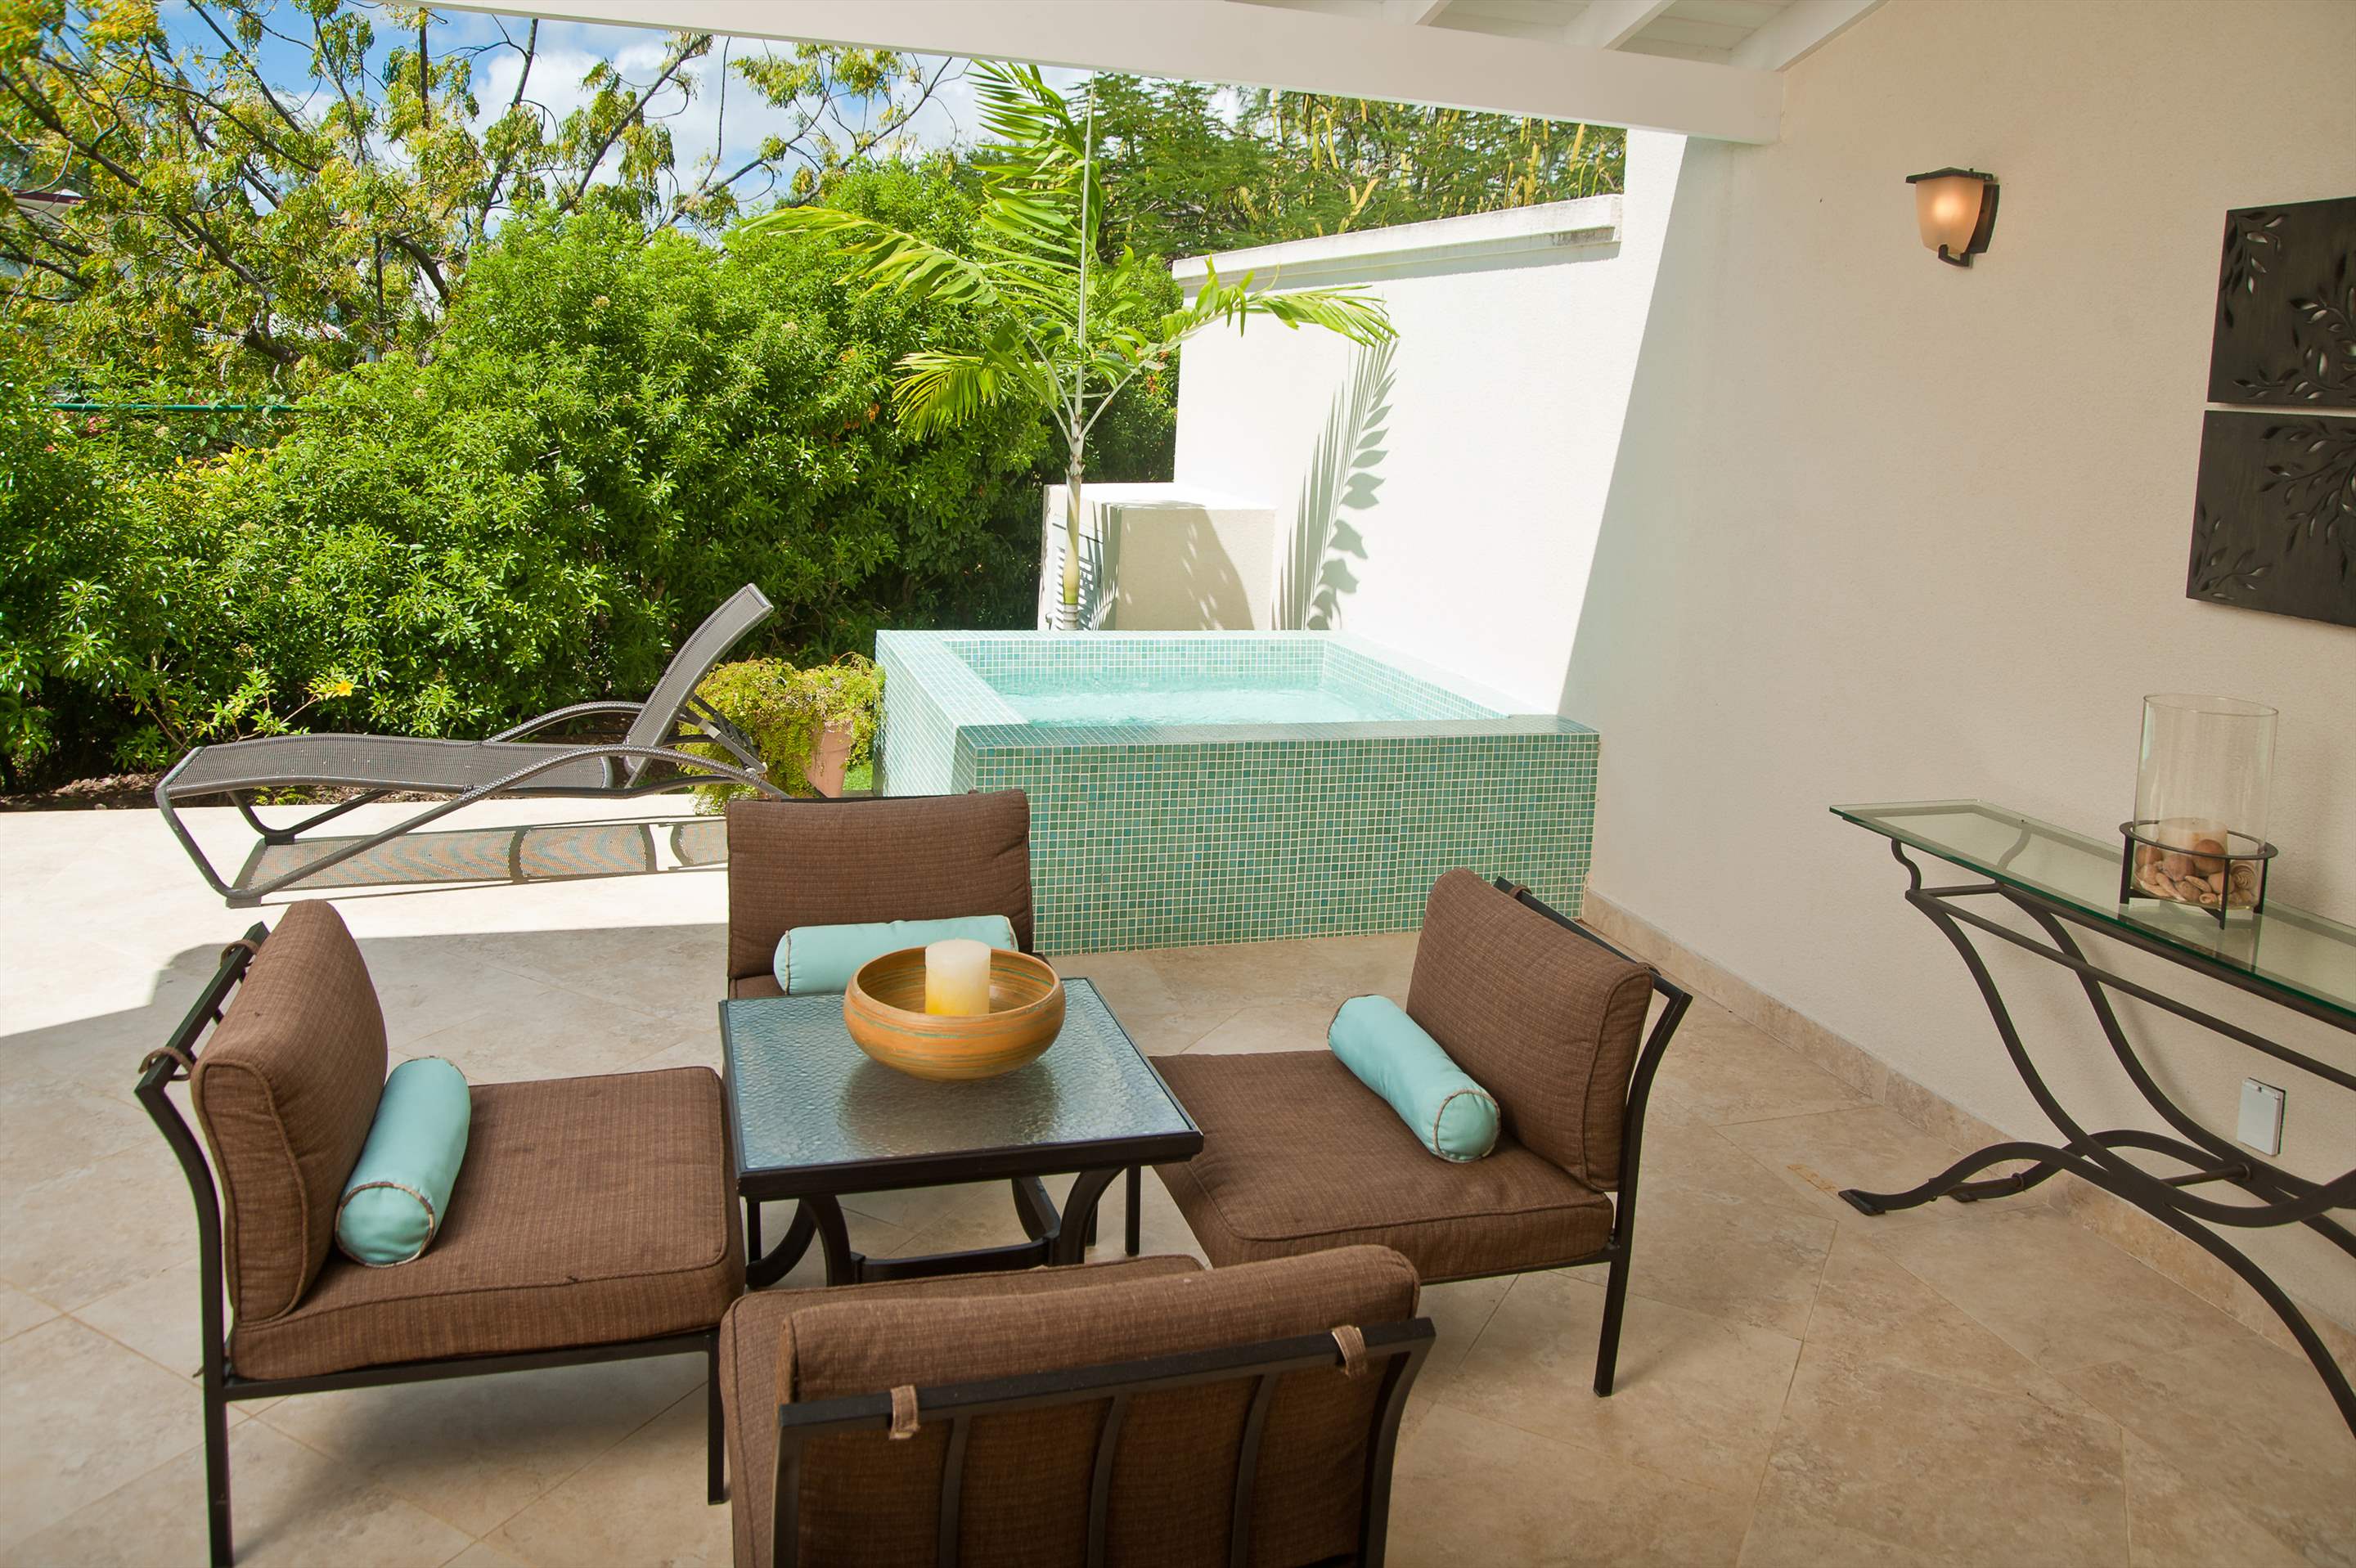 Palisades 6A, Freights Bay, 3 bedroom villa in St. Lawrence Gap & South Coast, Barbados Photo #1